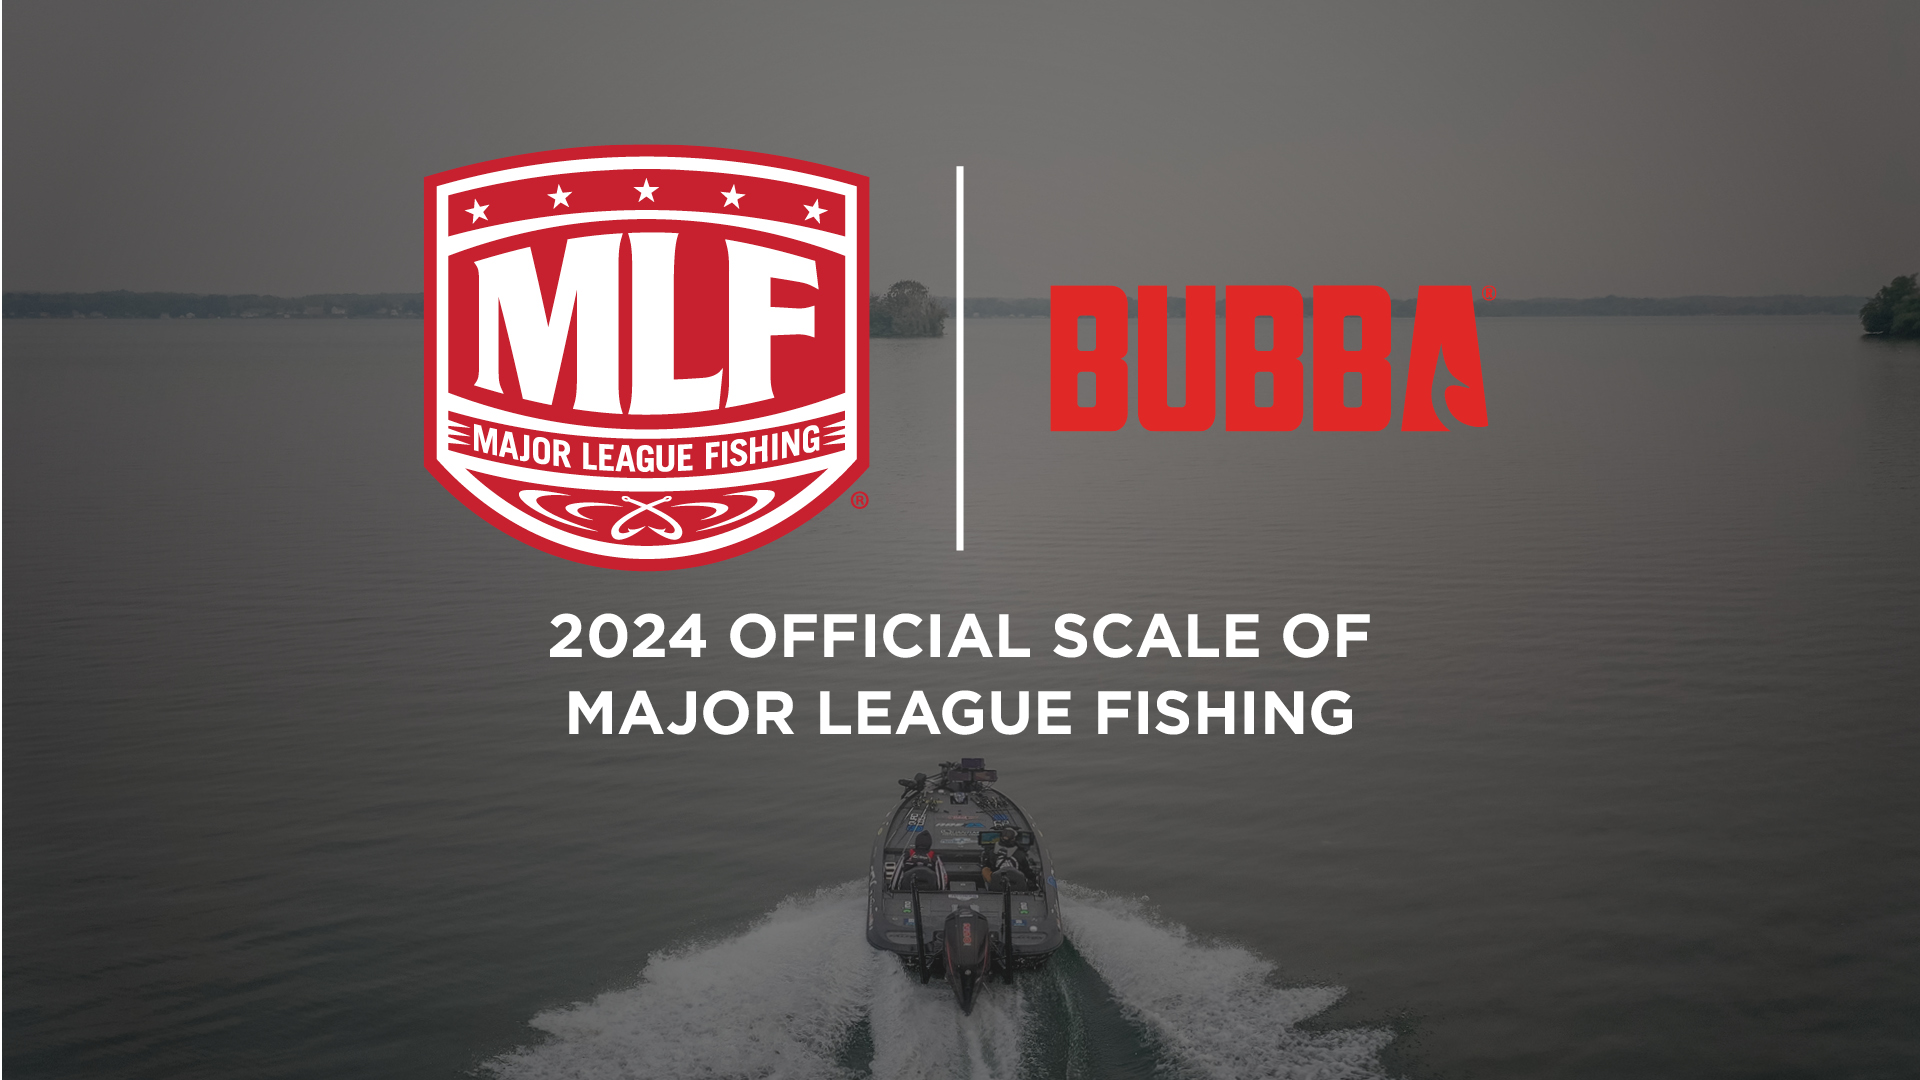 BUBBA® announces strategic partnership with Major League Fishing